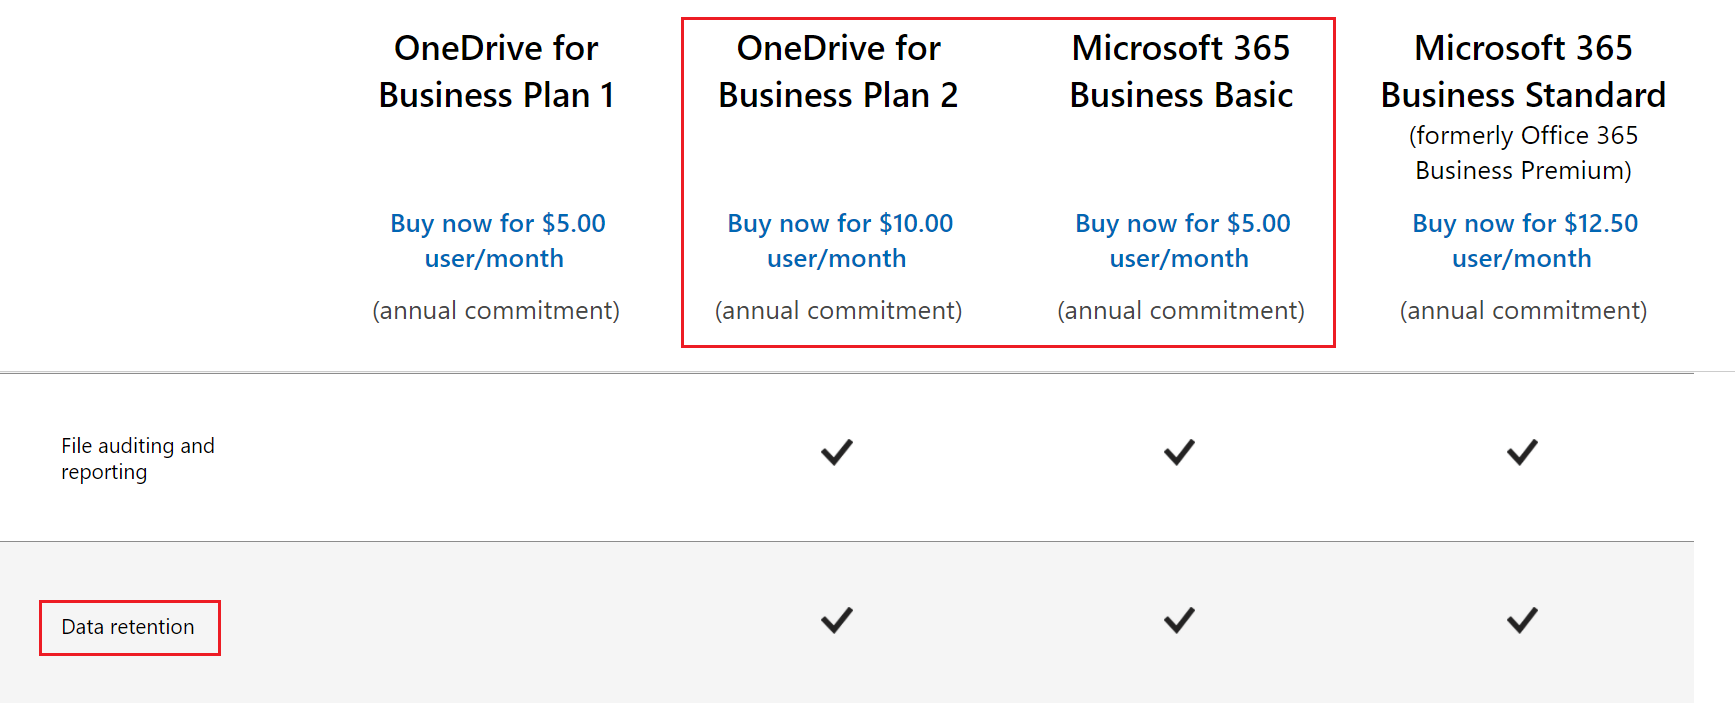 onedrive for business plan 1 vs 2